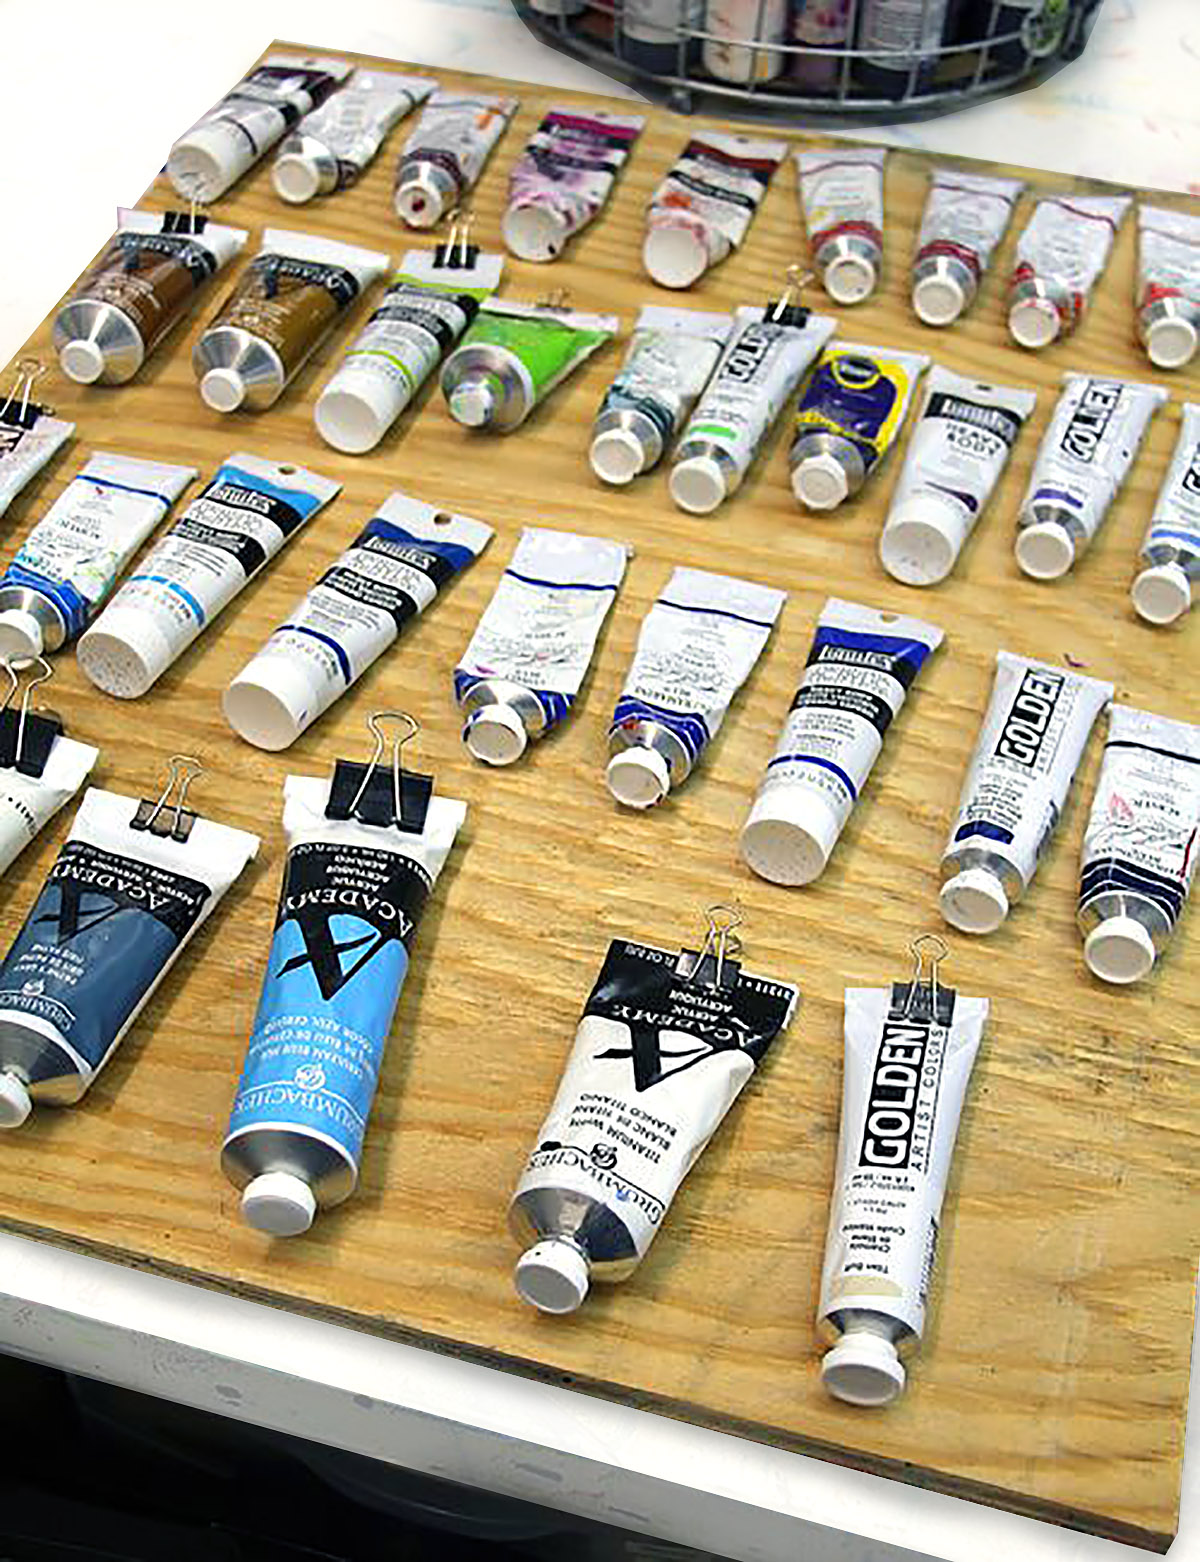 DIY Acrylic Paint Organizer  Paint storage diy, Paint organization,  Acrylic paint storage